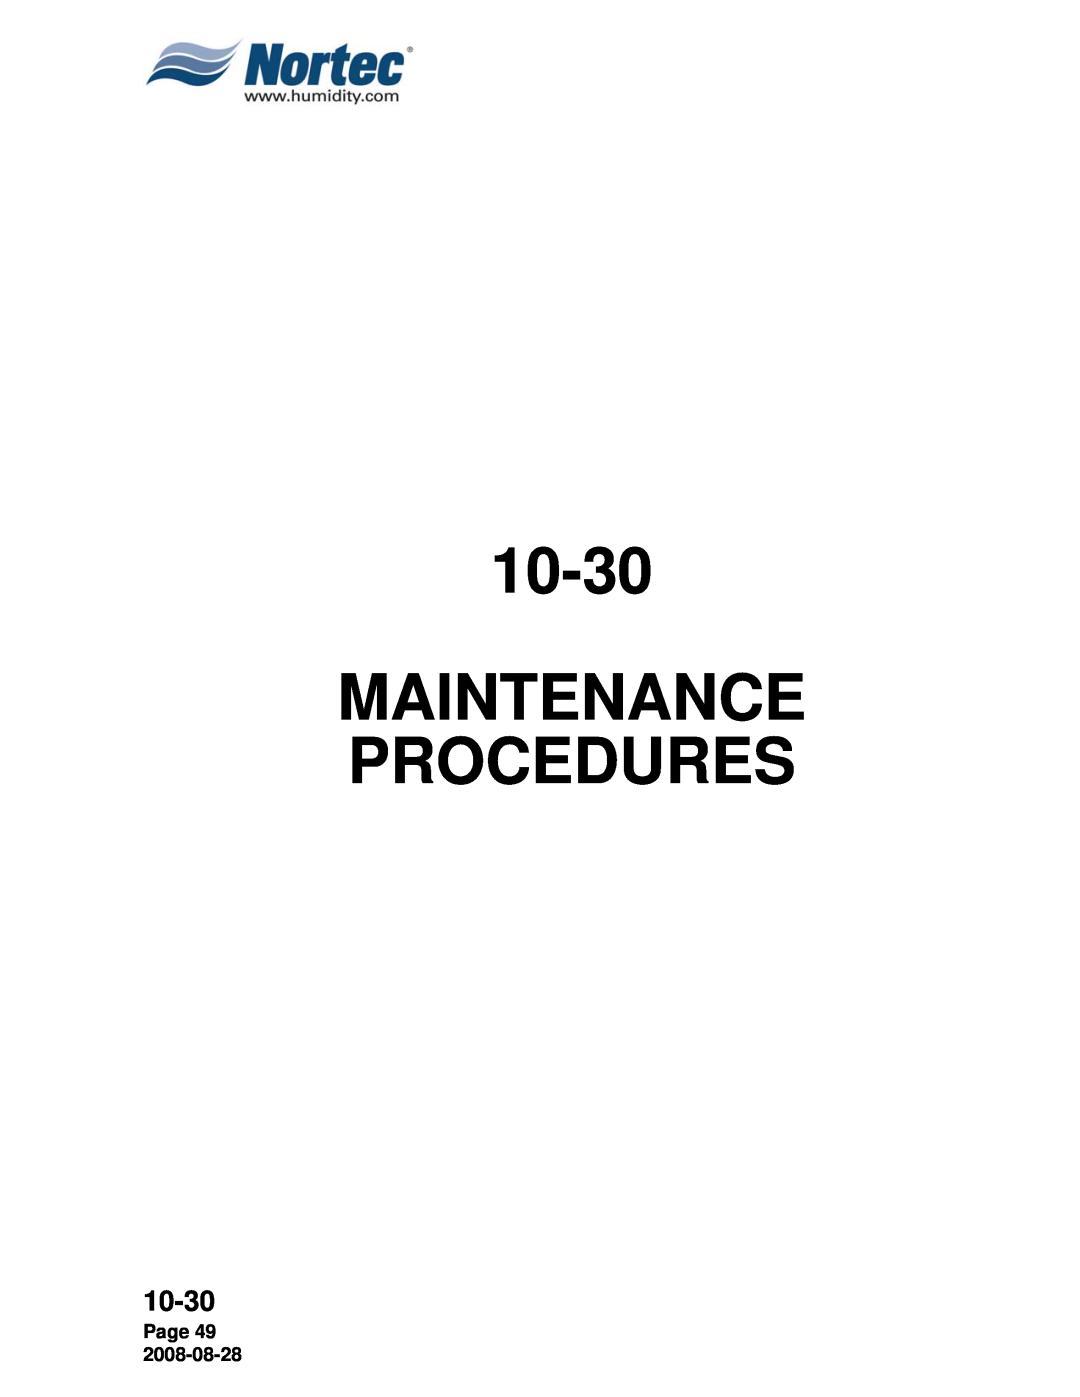 Nortec NH Series installation manual Maintenance Procedures, 10-30, Page 49 